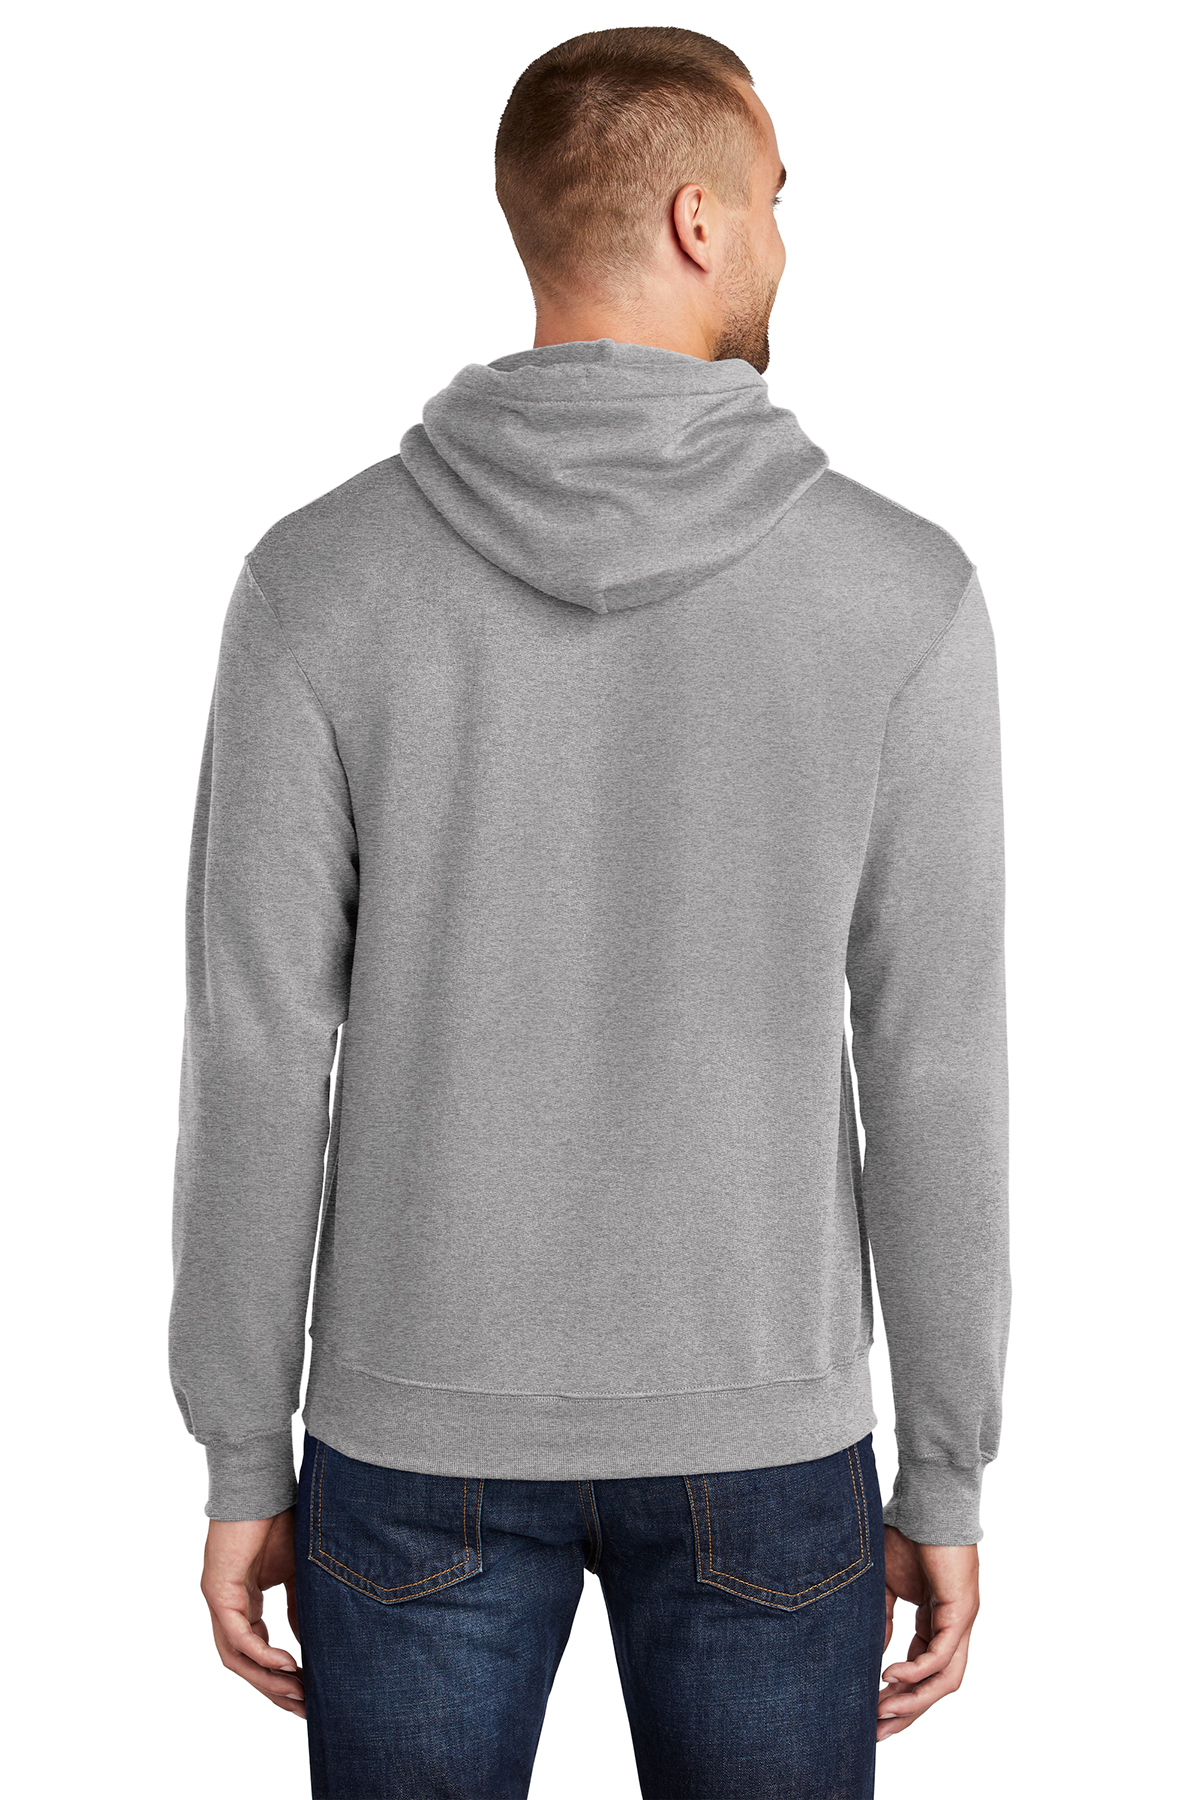 Port & Company Mens Ultimate Pullover Hooded Sweatshirt